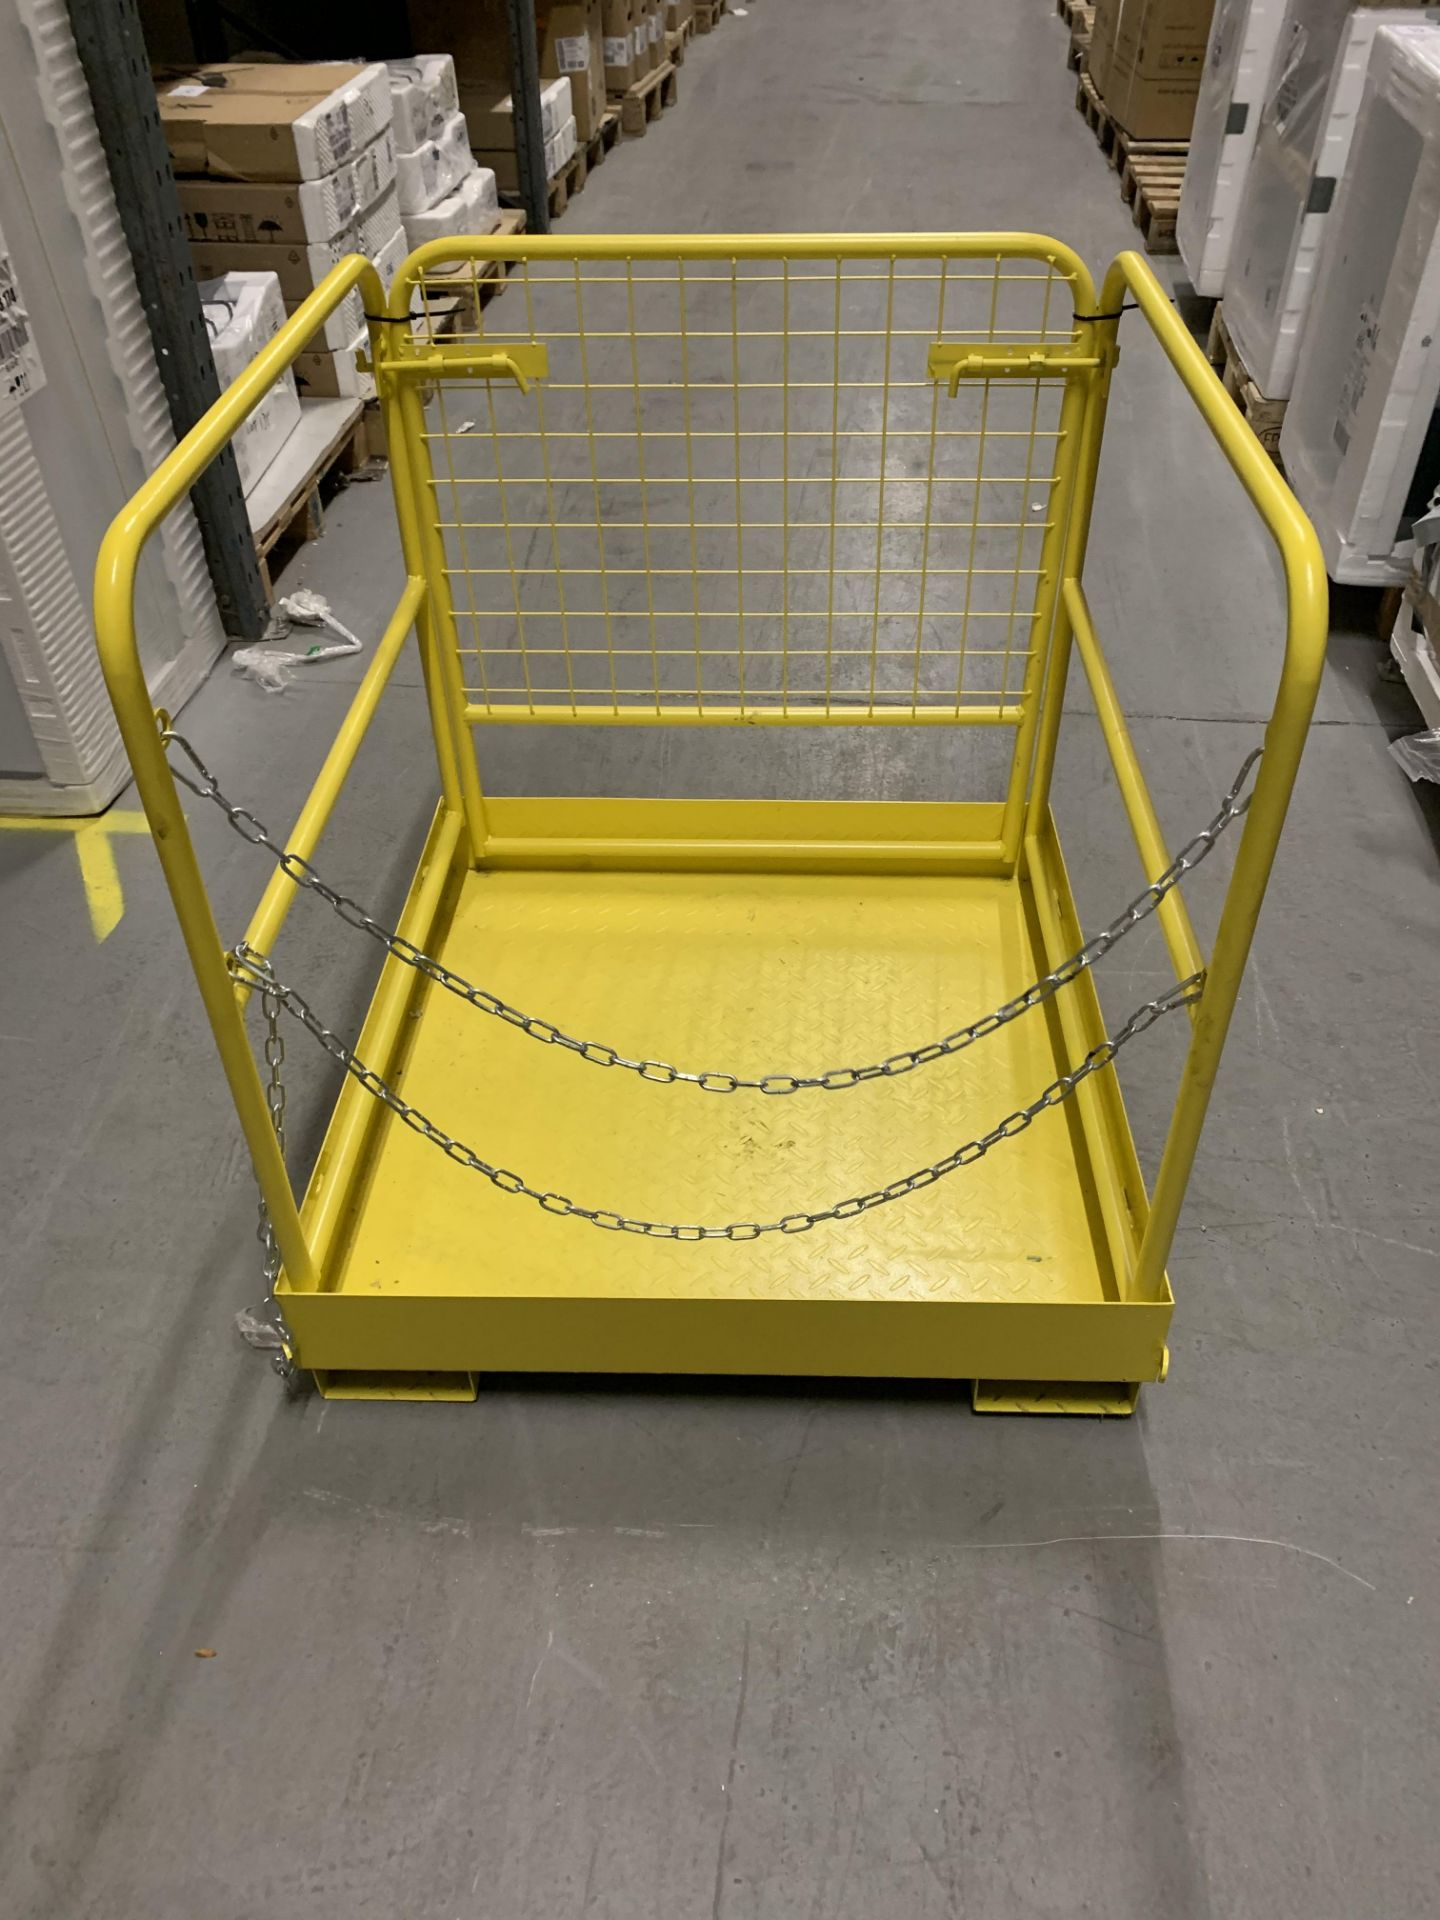 Forklift Personnel Cage